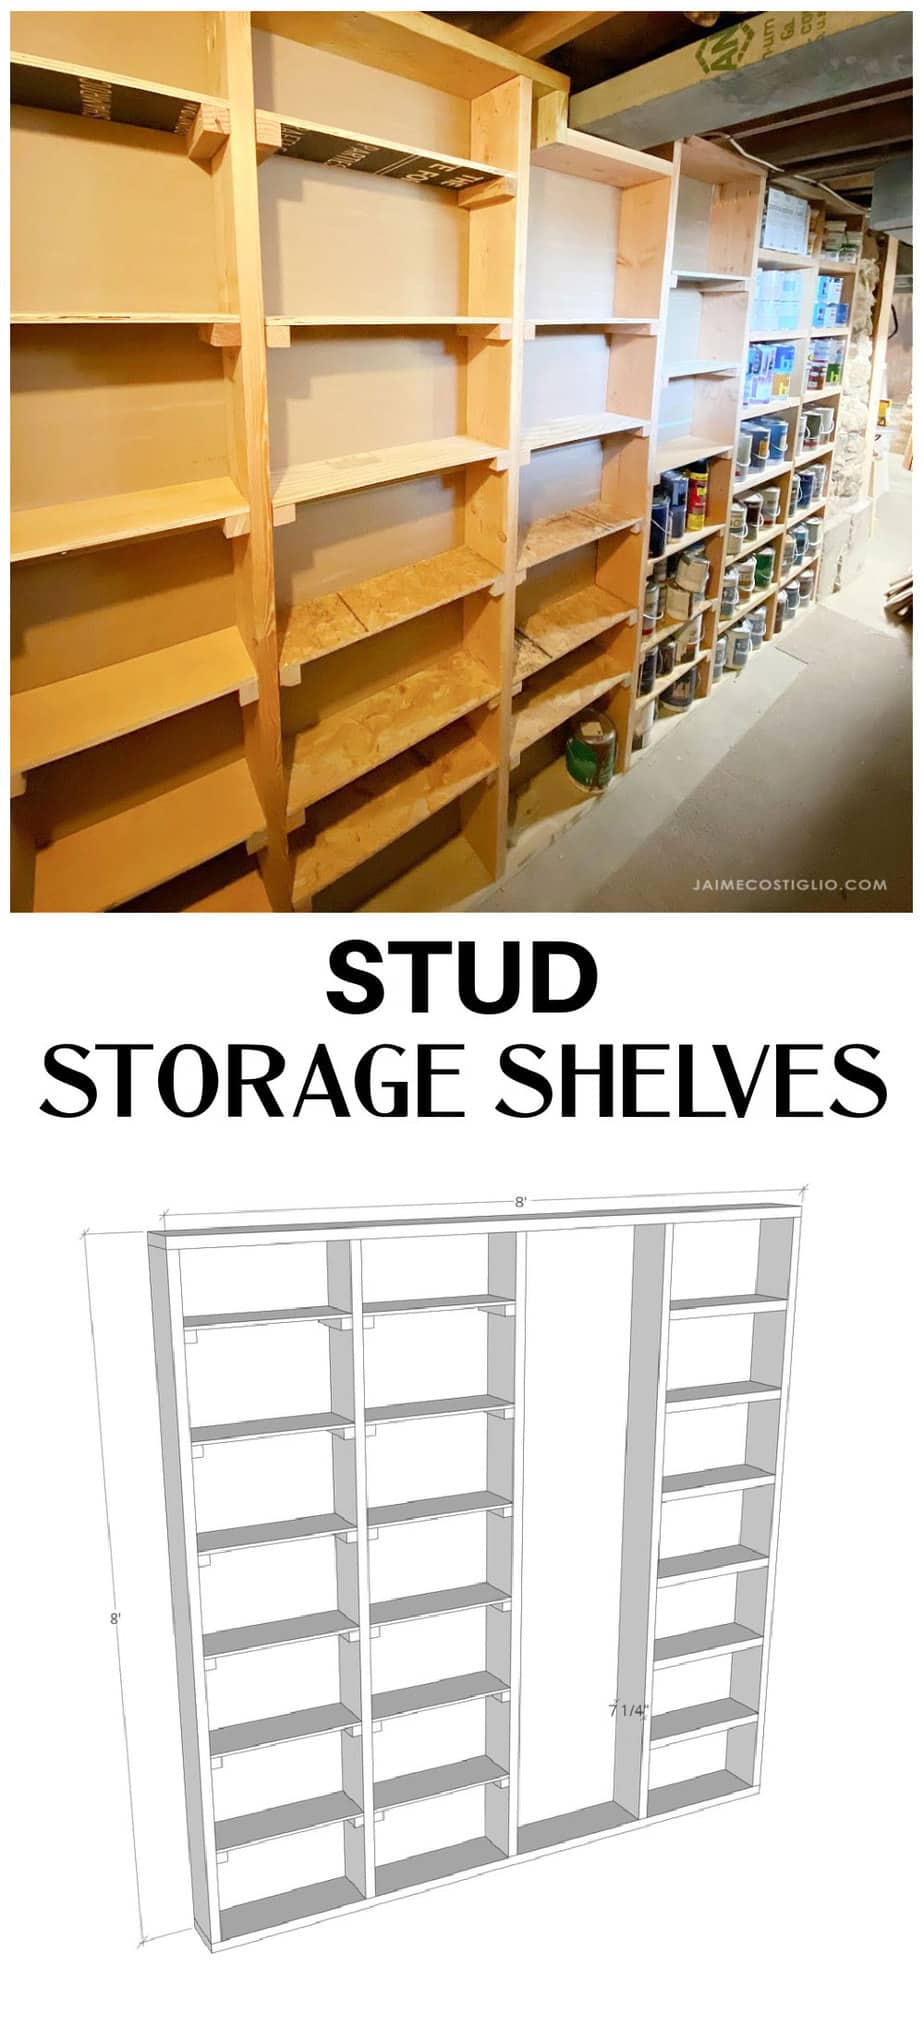 stud storage shelves collage